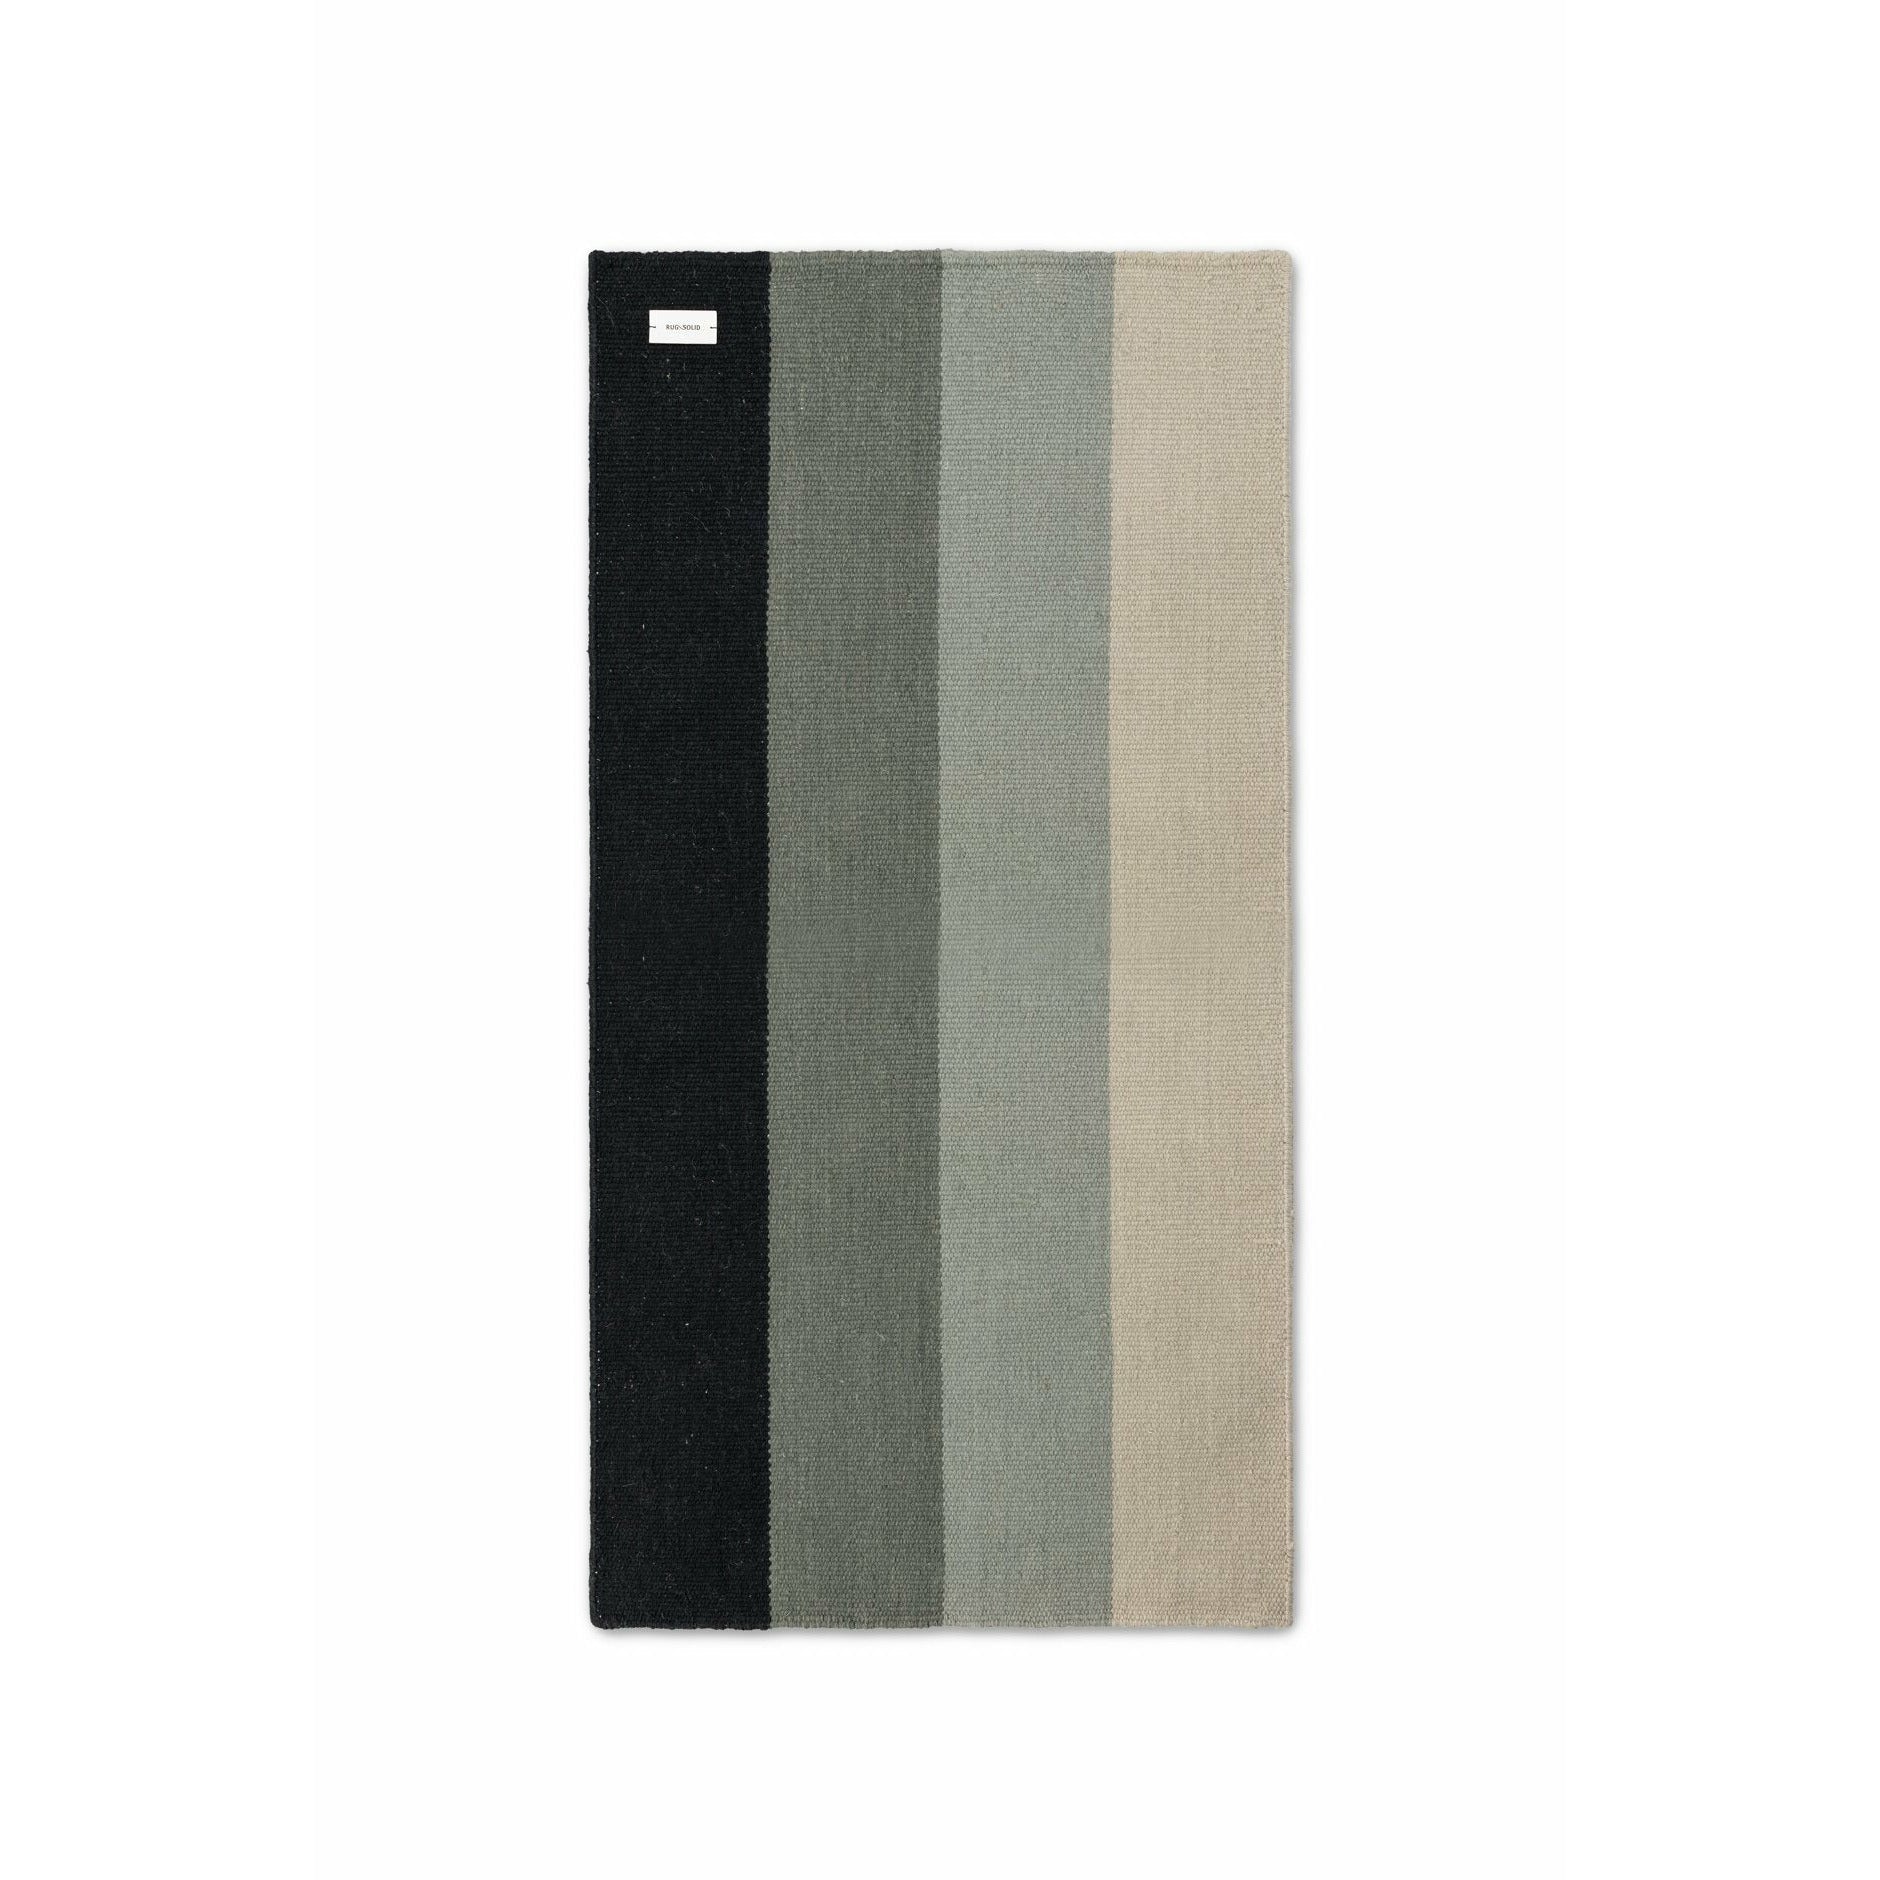 Rug Solid Huisdier tapijtgradiënt graniet, 140 x 200 cm